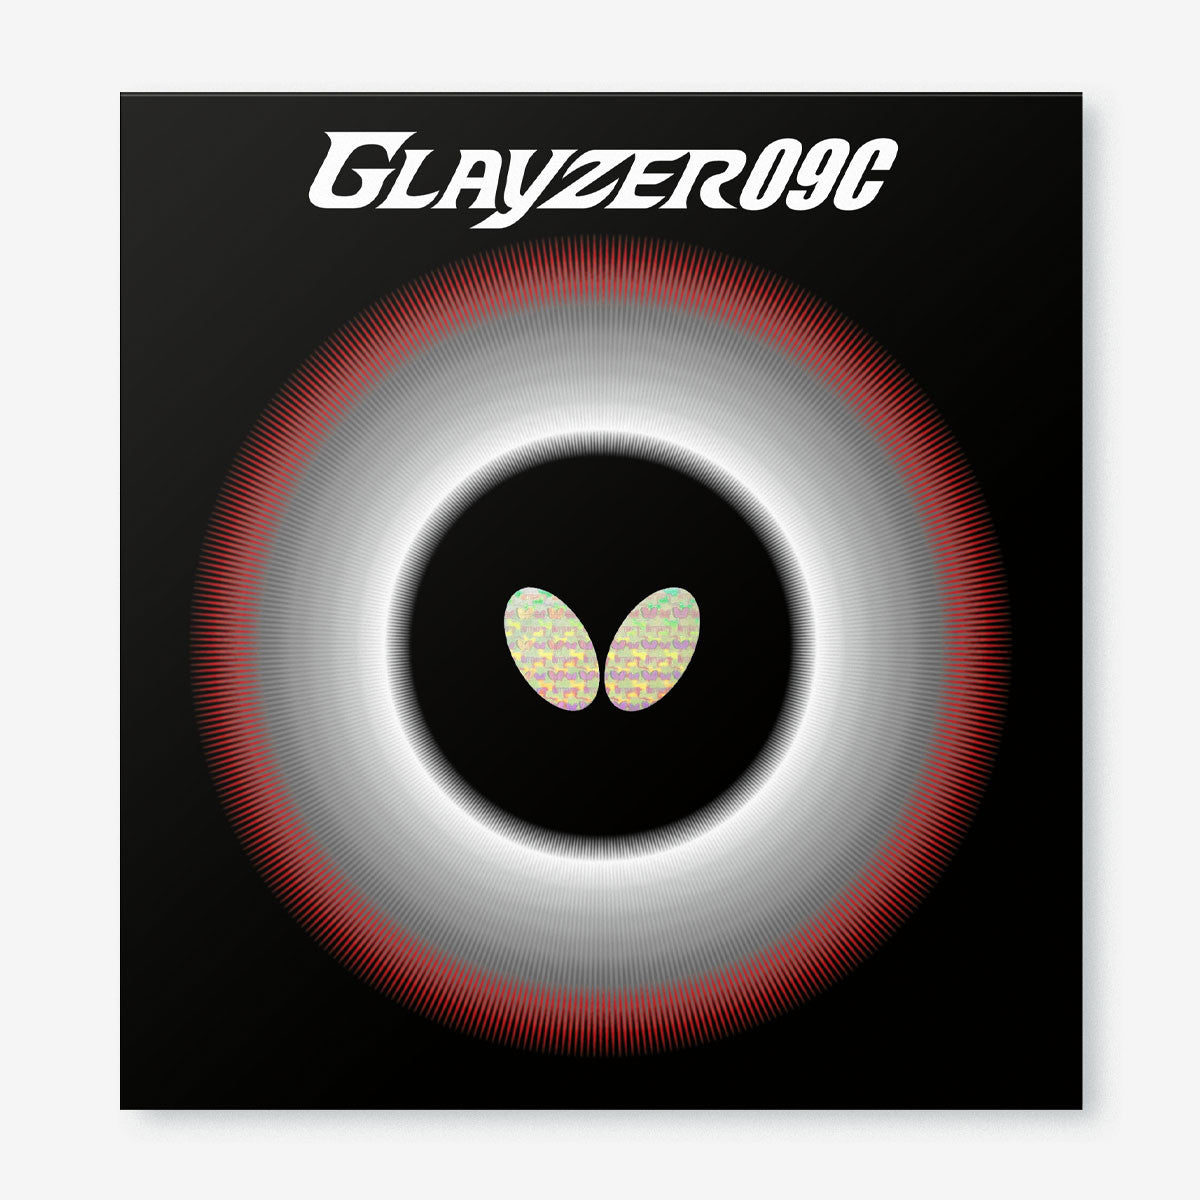 Butterfly Glayzer 09C Table Tennis Rubber Butterfly